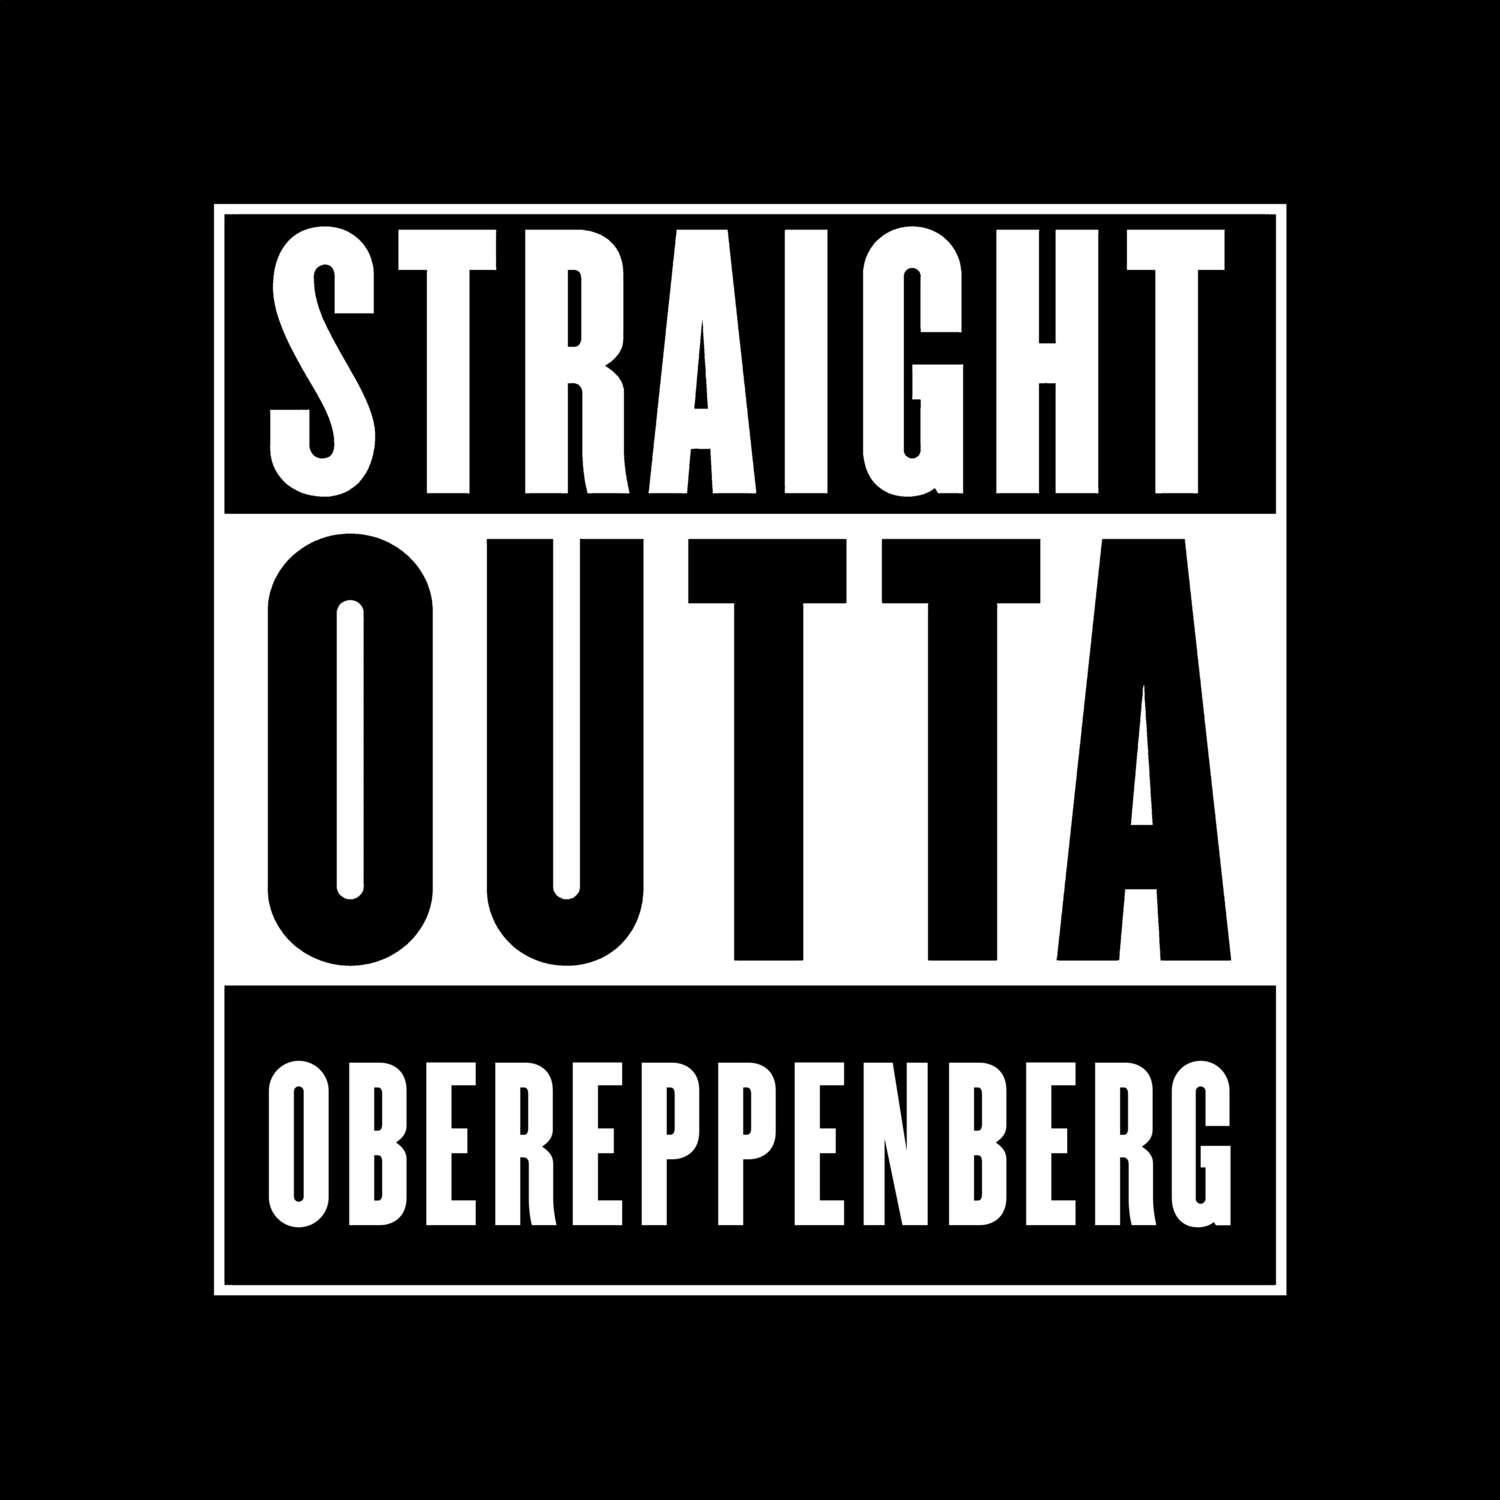 Obereppenberg T-Shirt »Straight Outta«